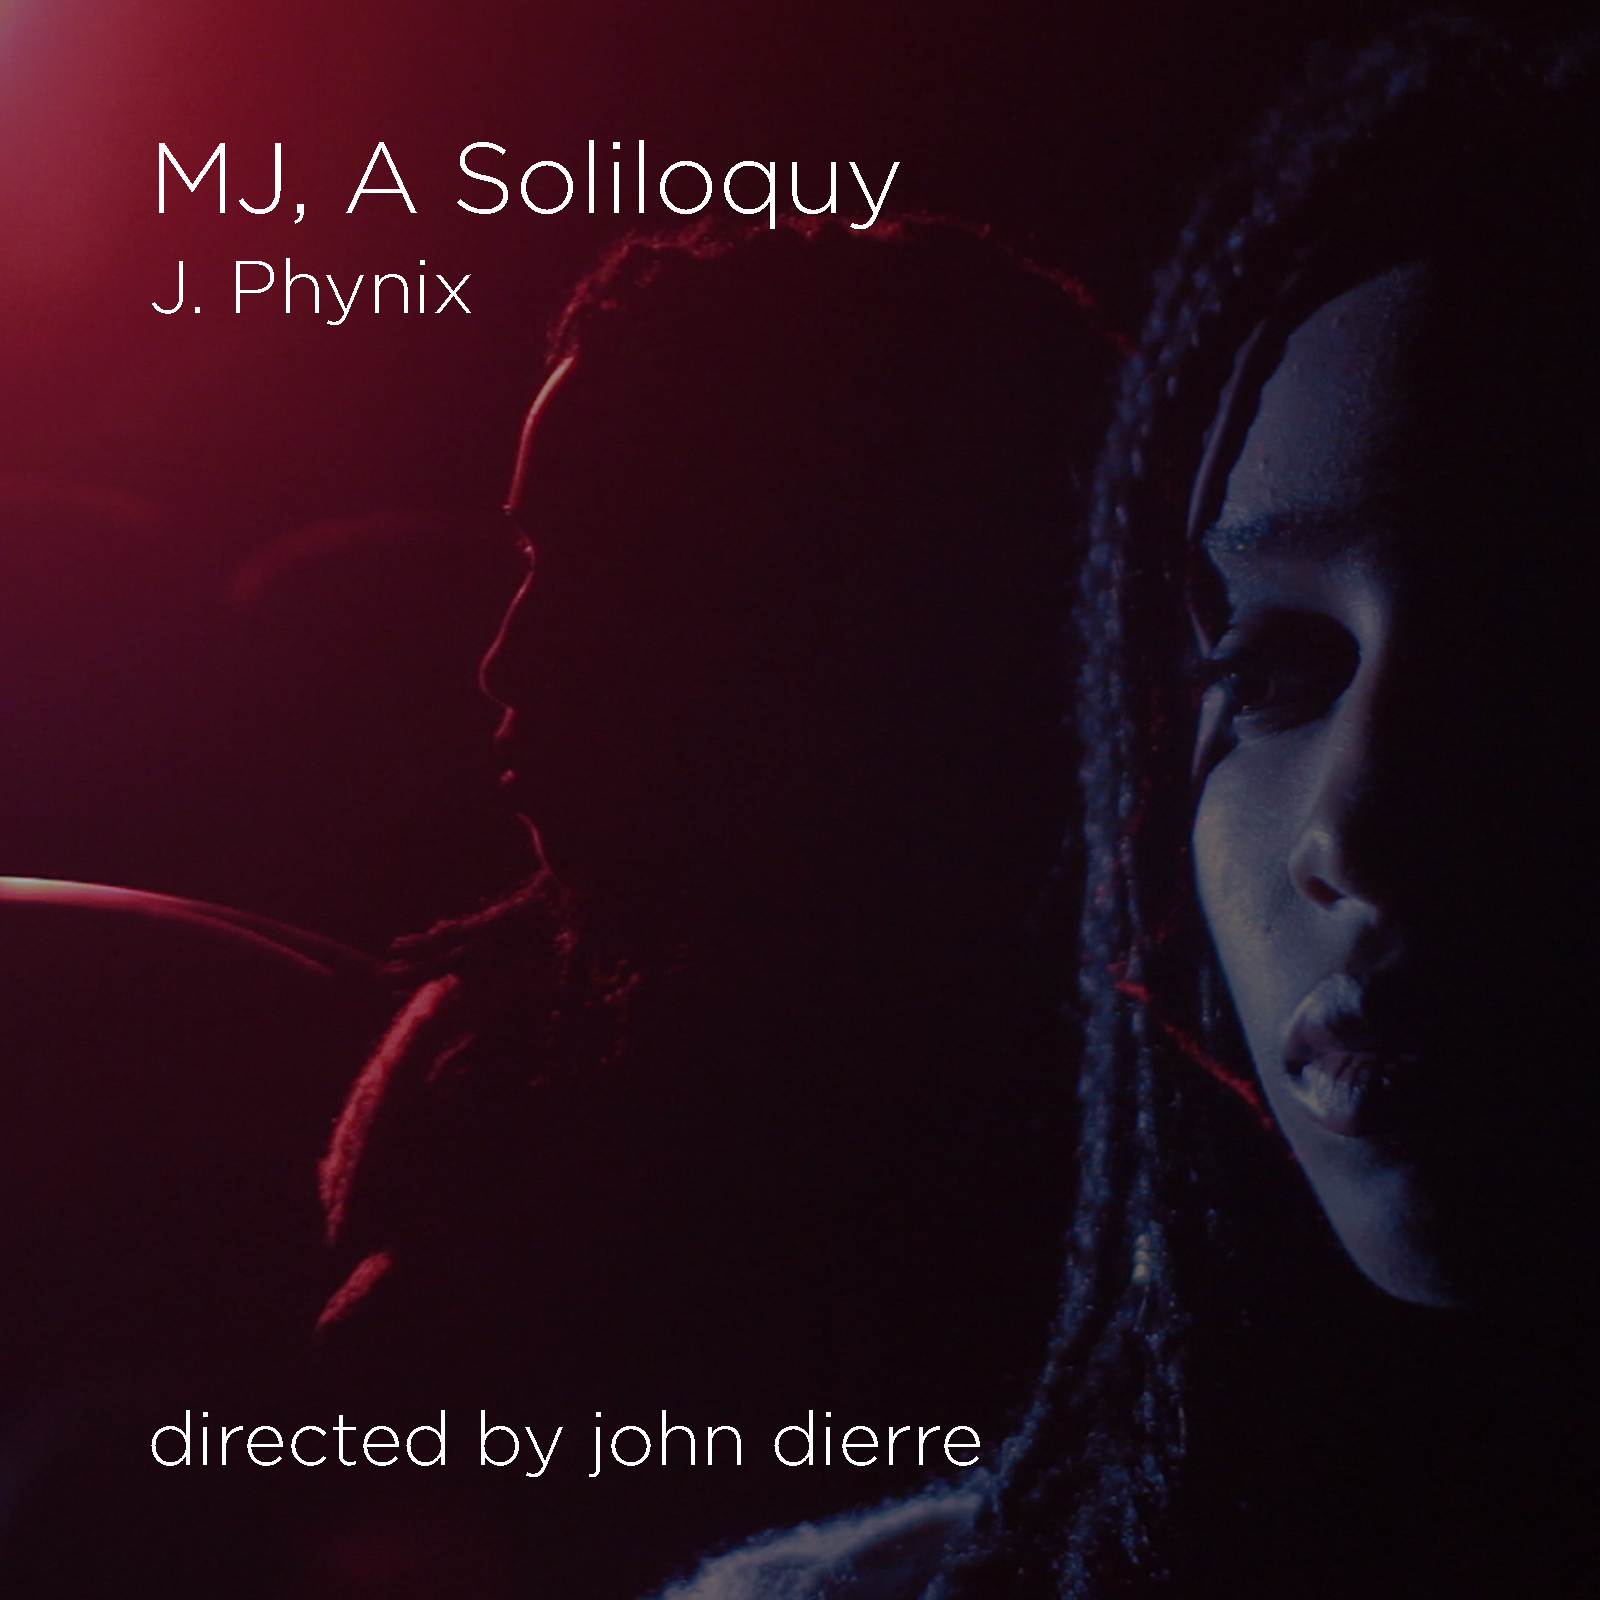 j. phynix MJ, A Soliloqy single cover art rap music